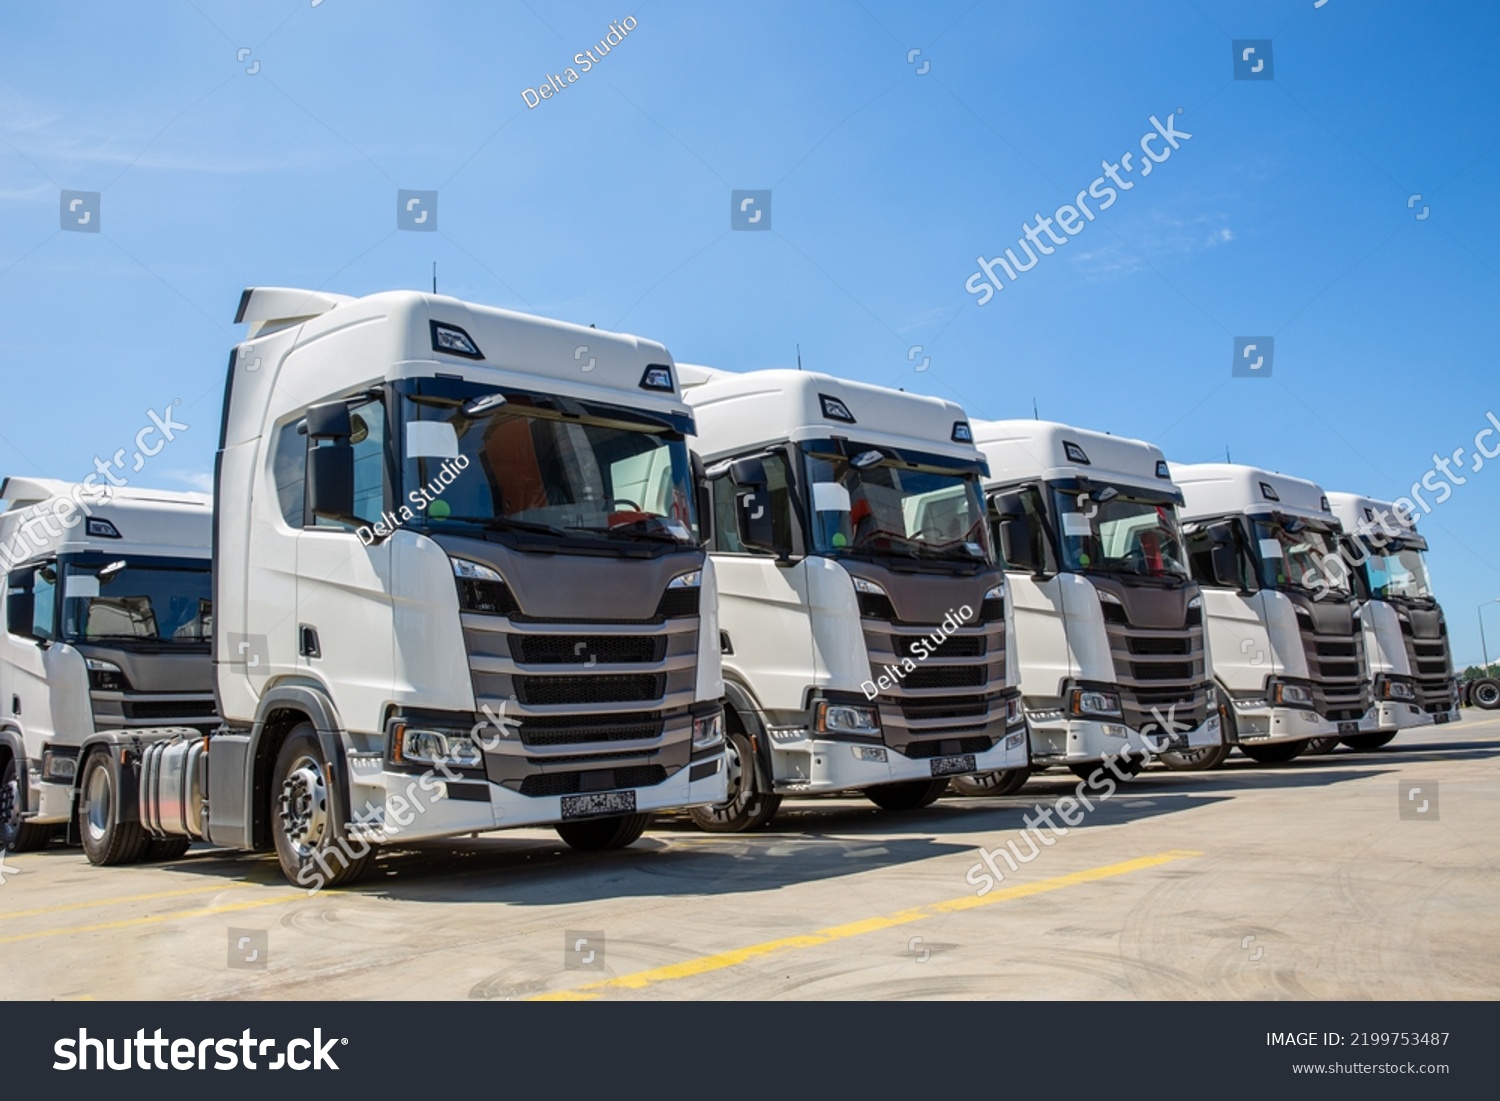 New truck fleet in the parking area #2199753487